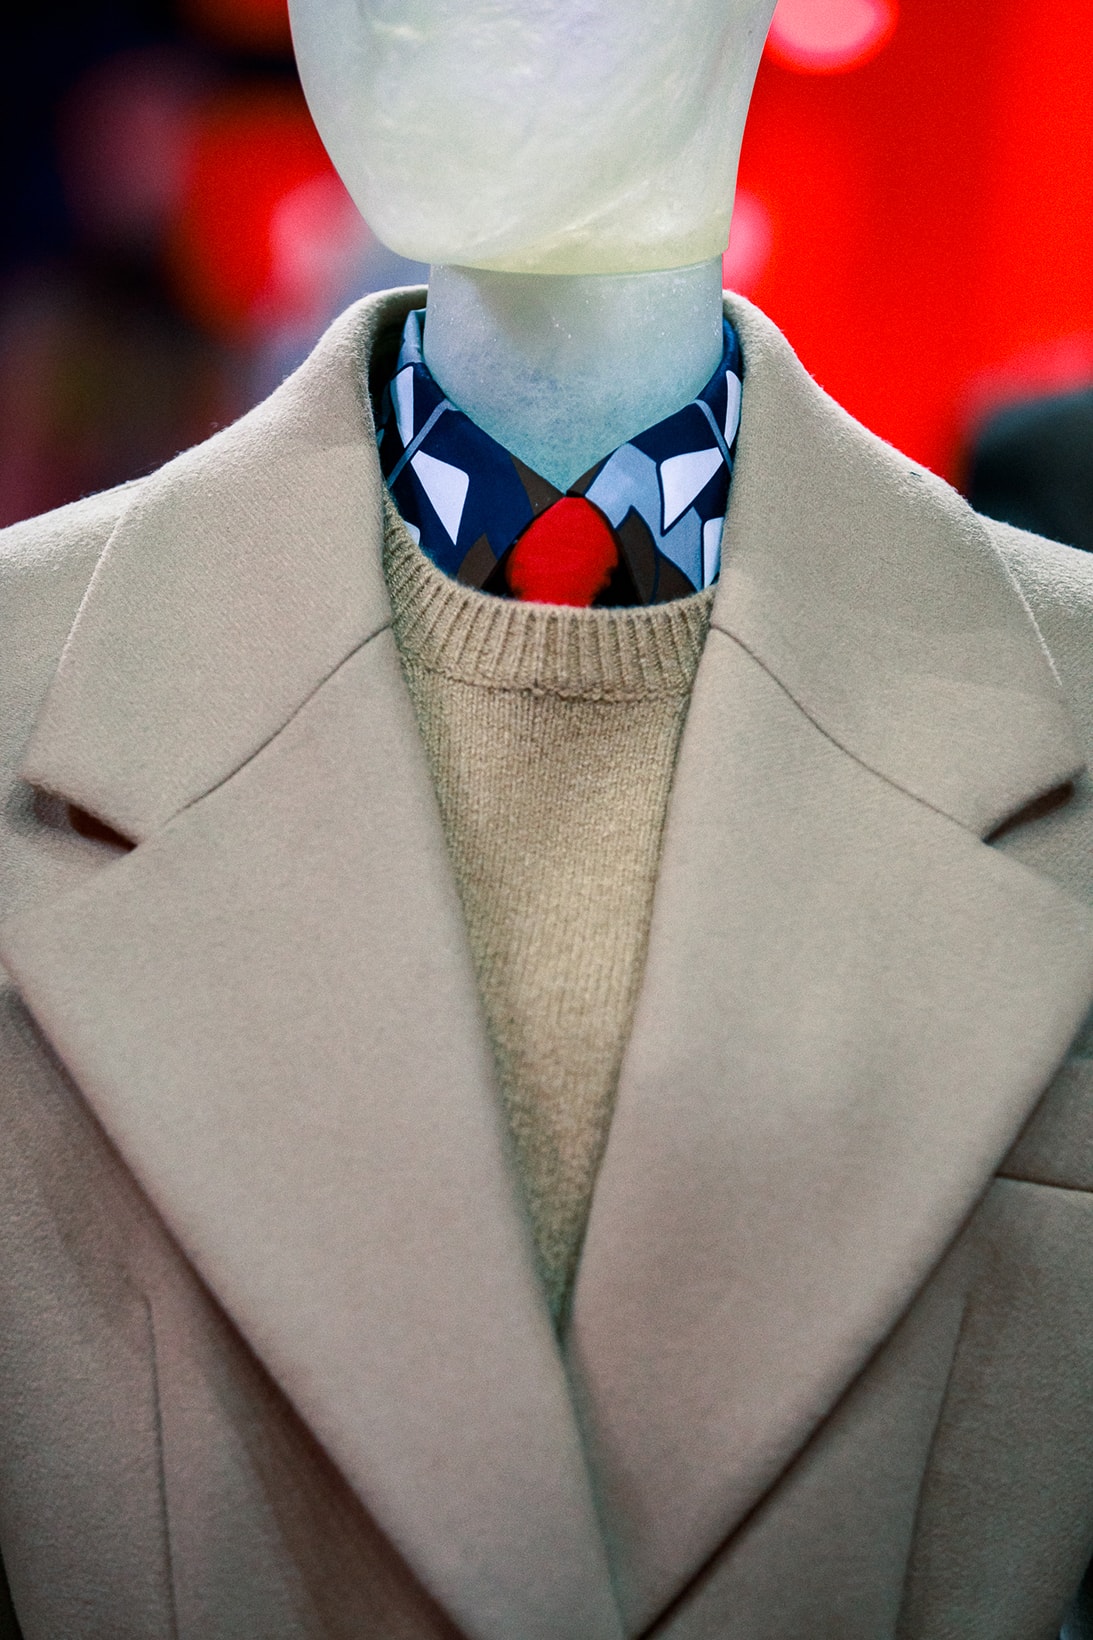 prada fall winter collection milan fashion week miuccia closer look jackets belts bags scarves headbands accessories